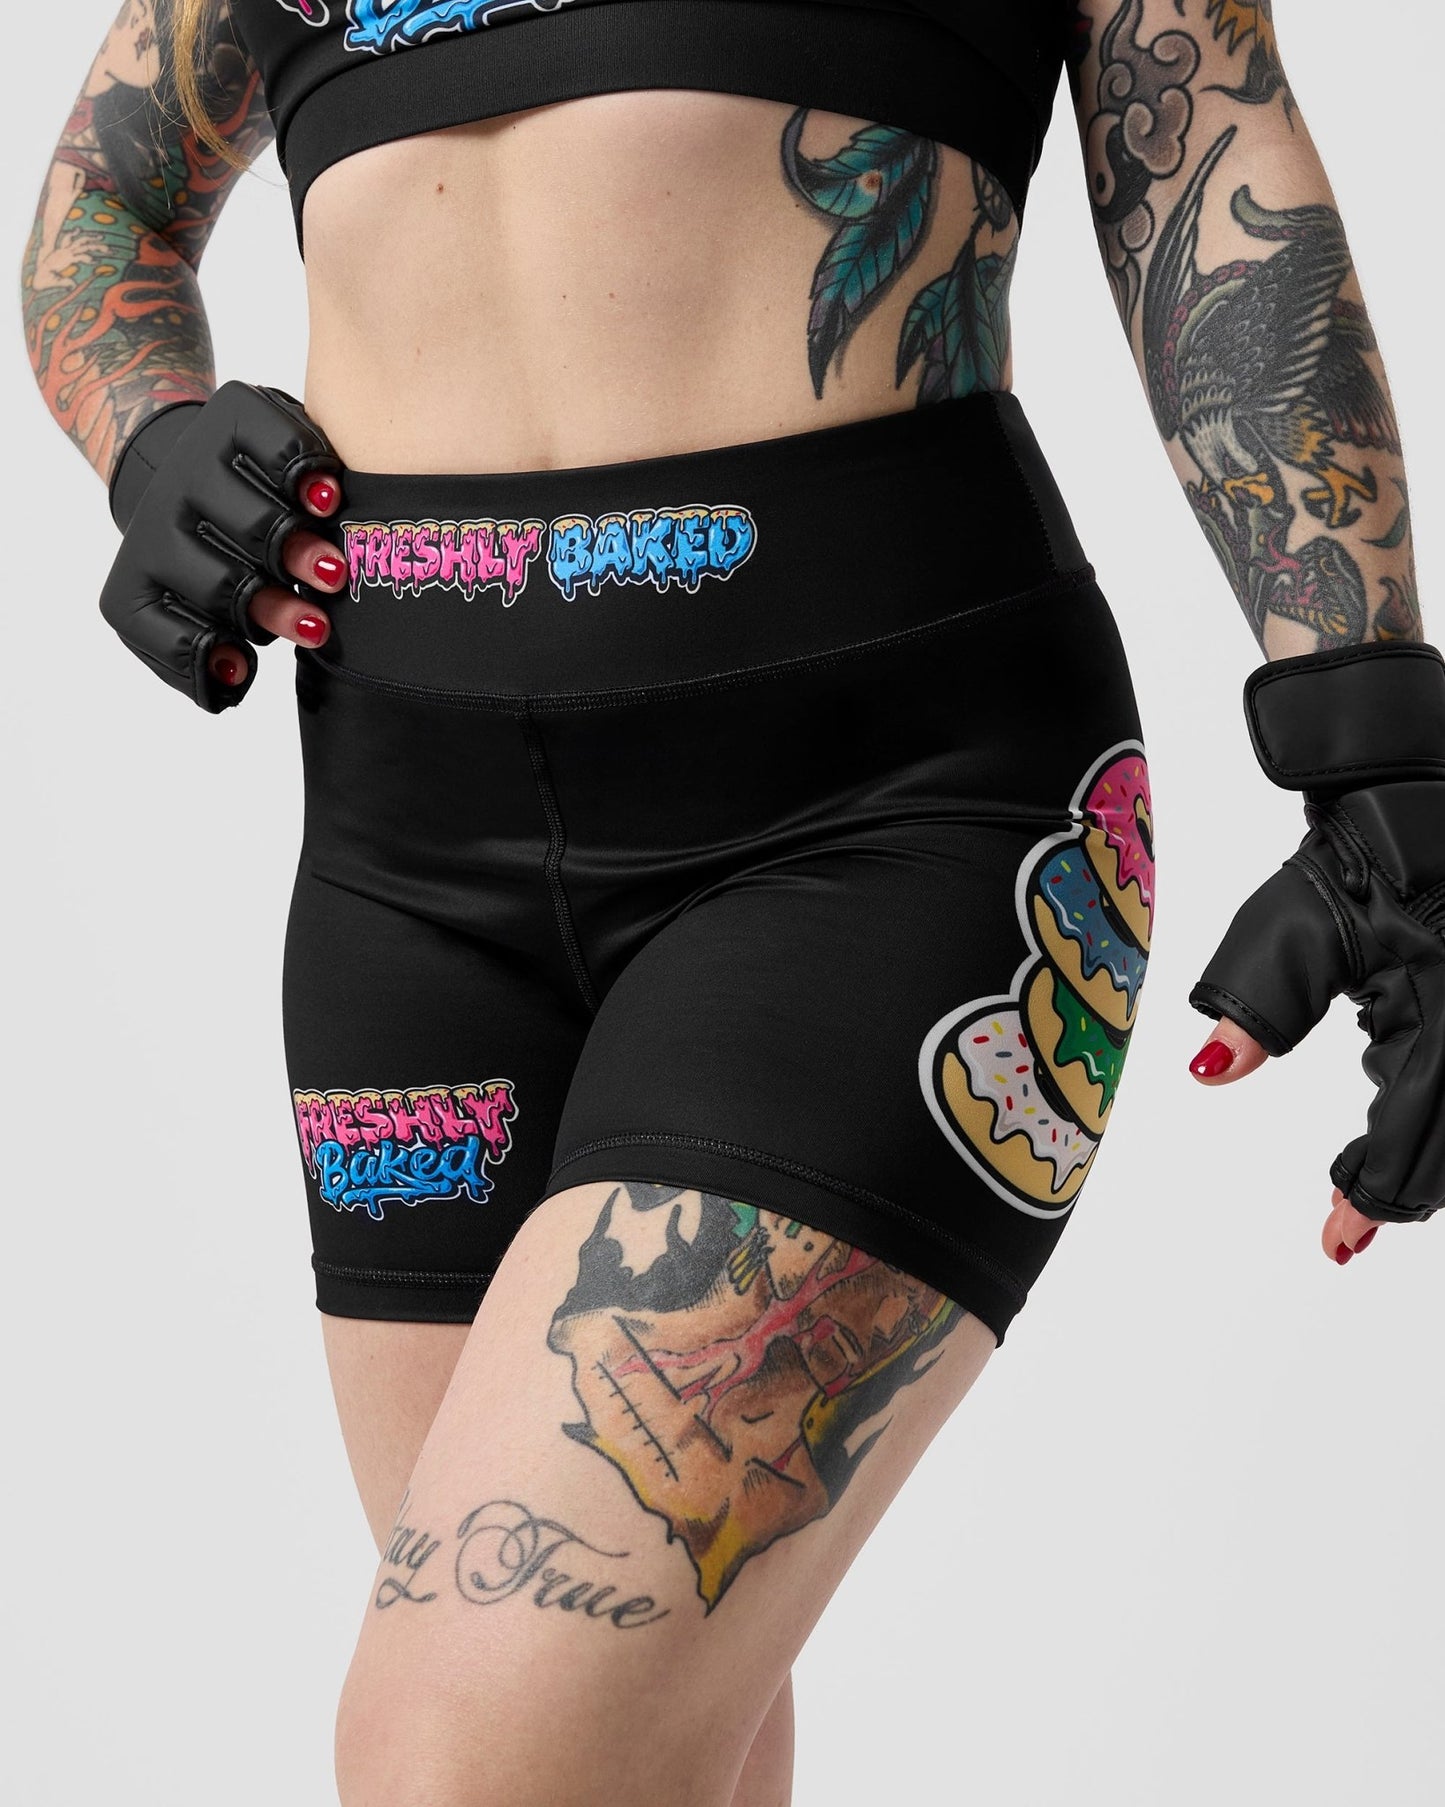 Freshly Baked Women's 5" Compression Shorts - Freshly Baked Fightwear